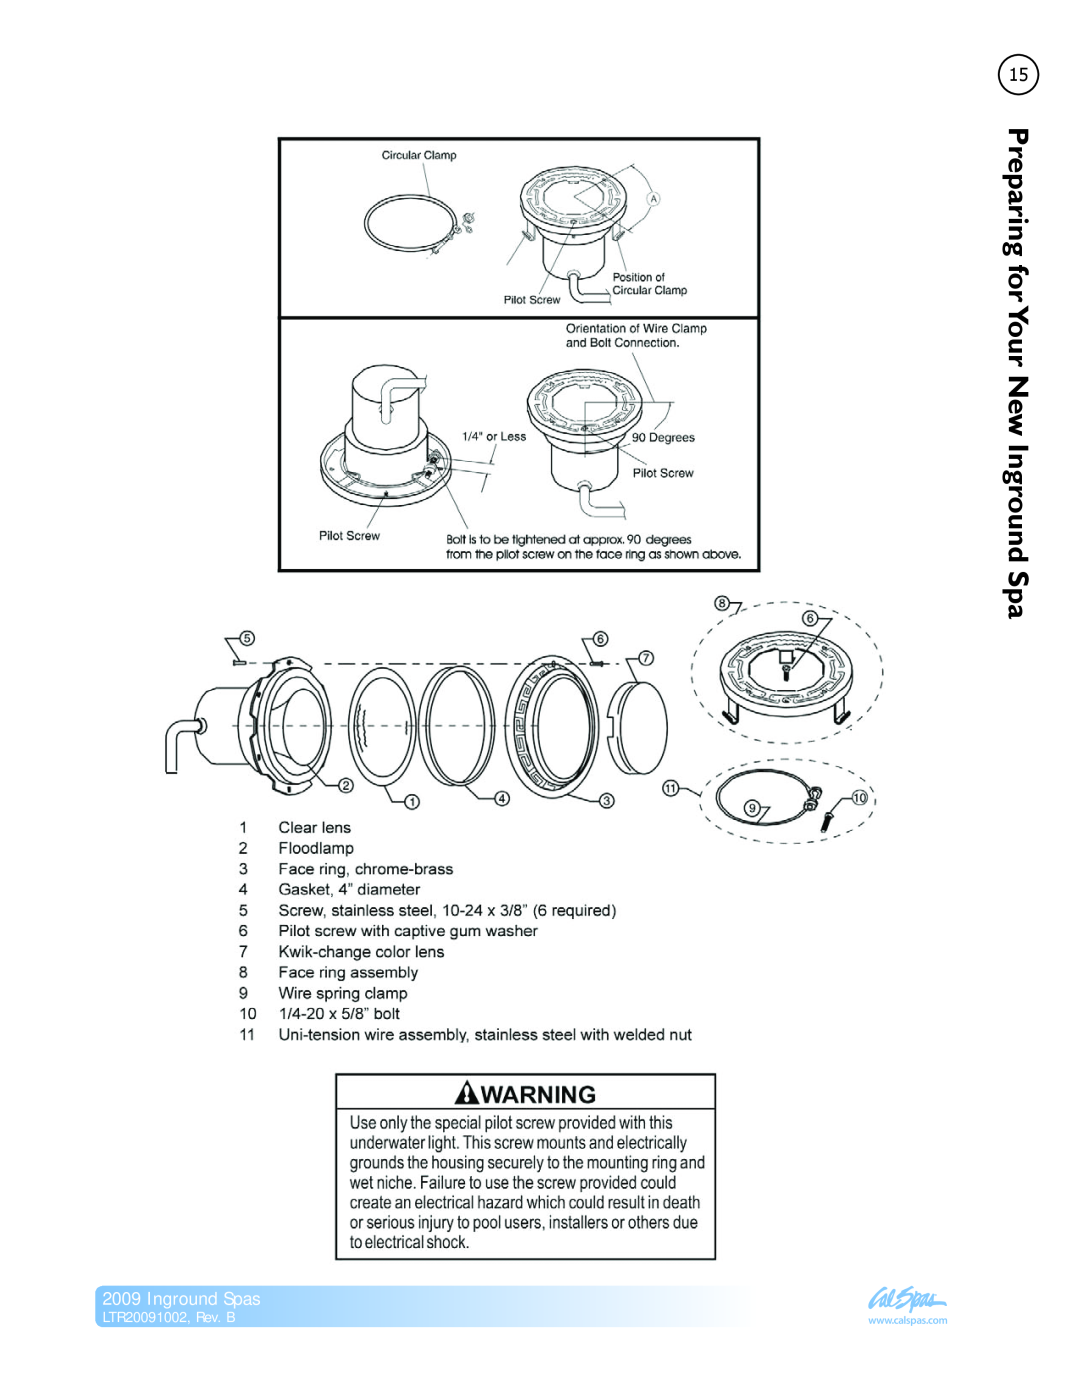 Cal Spas manual Your New Inground Spa, Inground Spas, LTR20091002, Rev. B, Preparingfor 